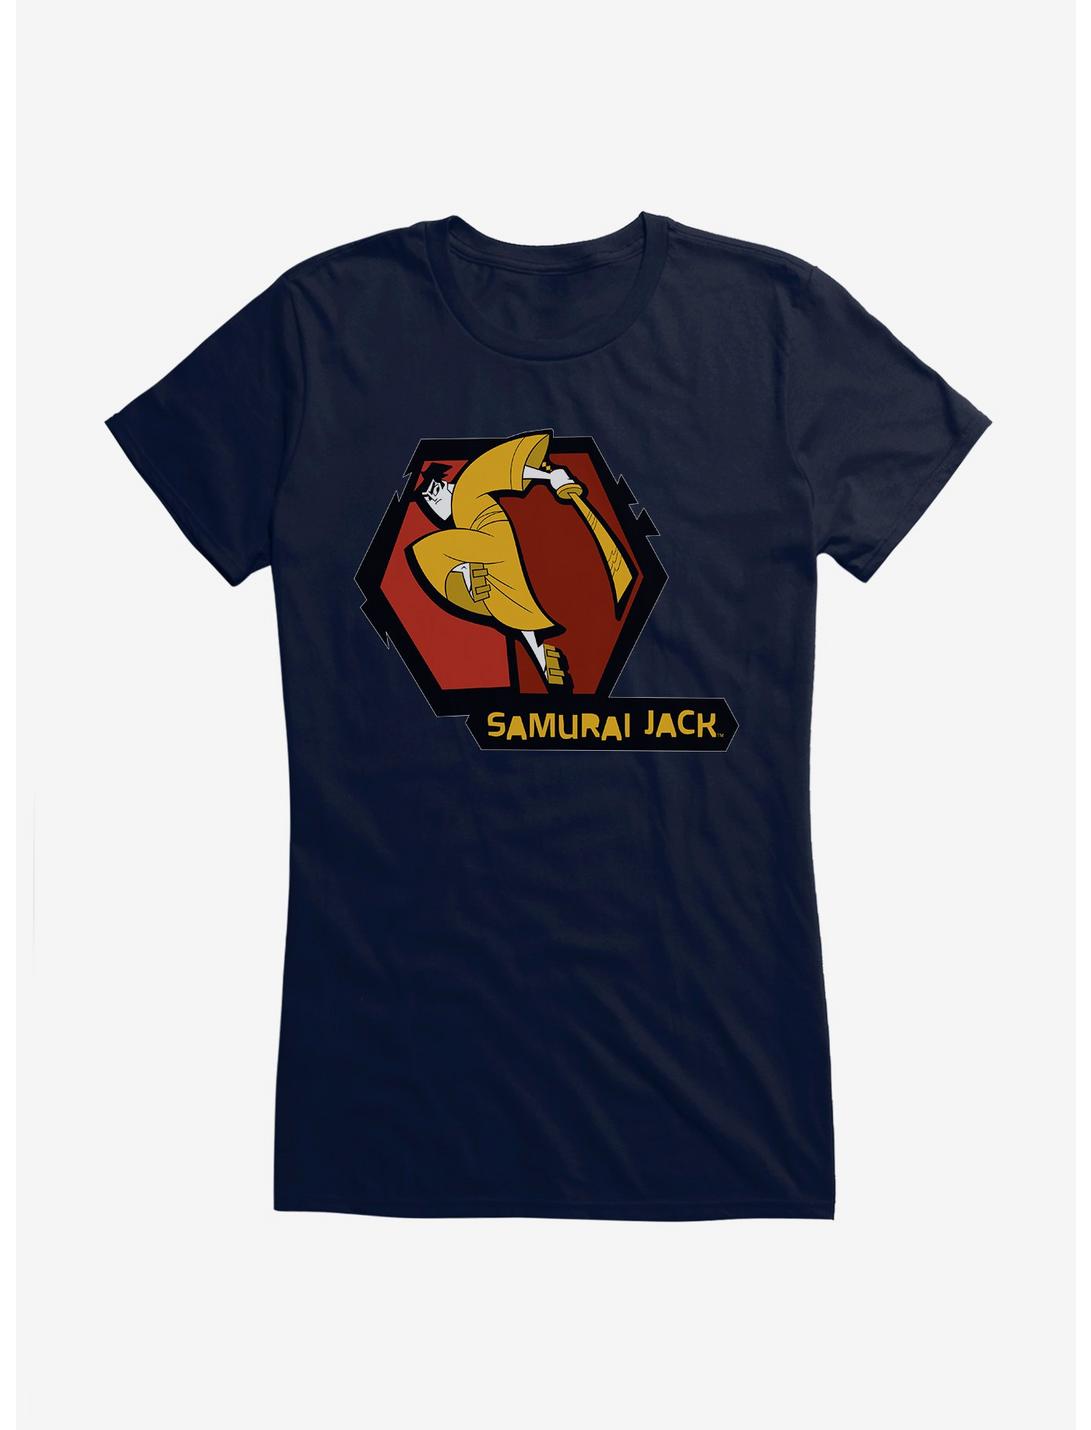 Samurai Jack Battle Ready Girls T-Shirt, , hi-res